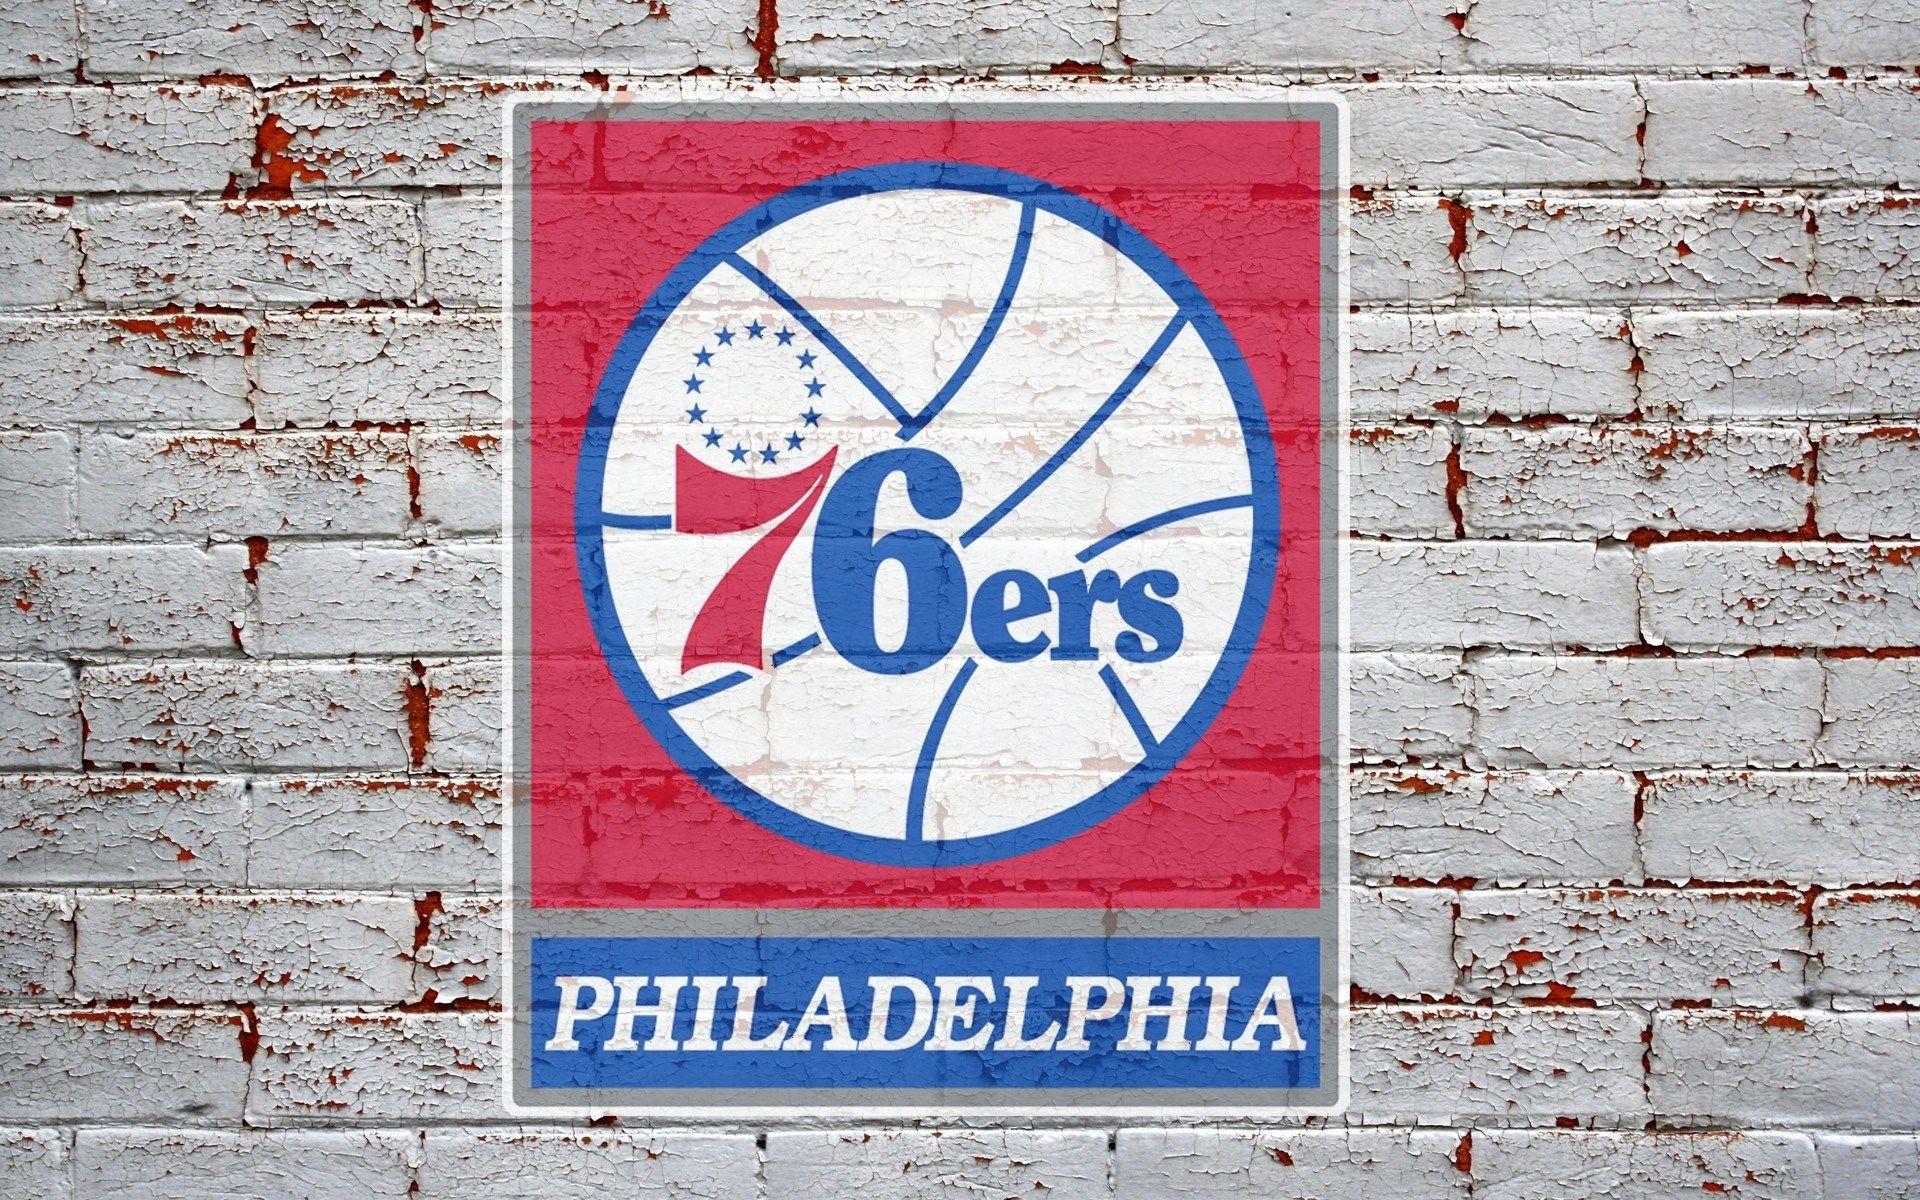 Philadelphia 76Ers Wallpaper background picture